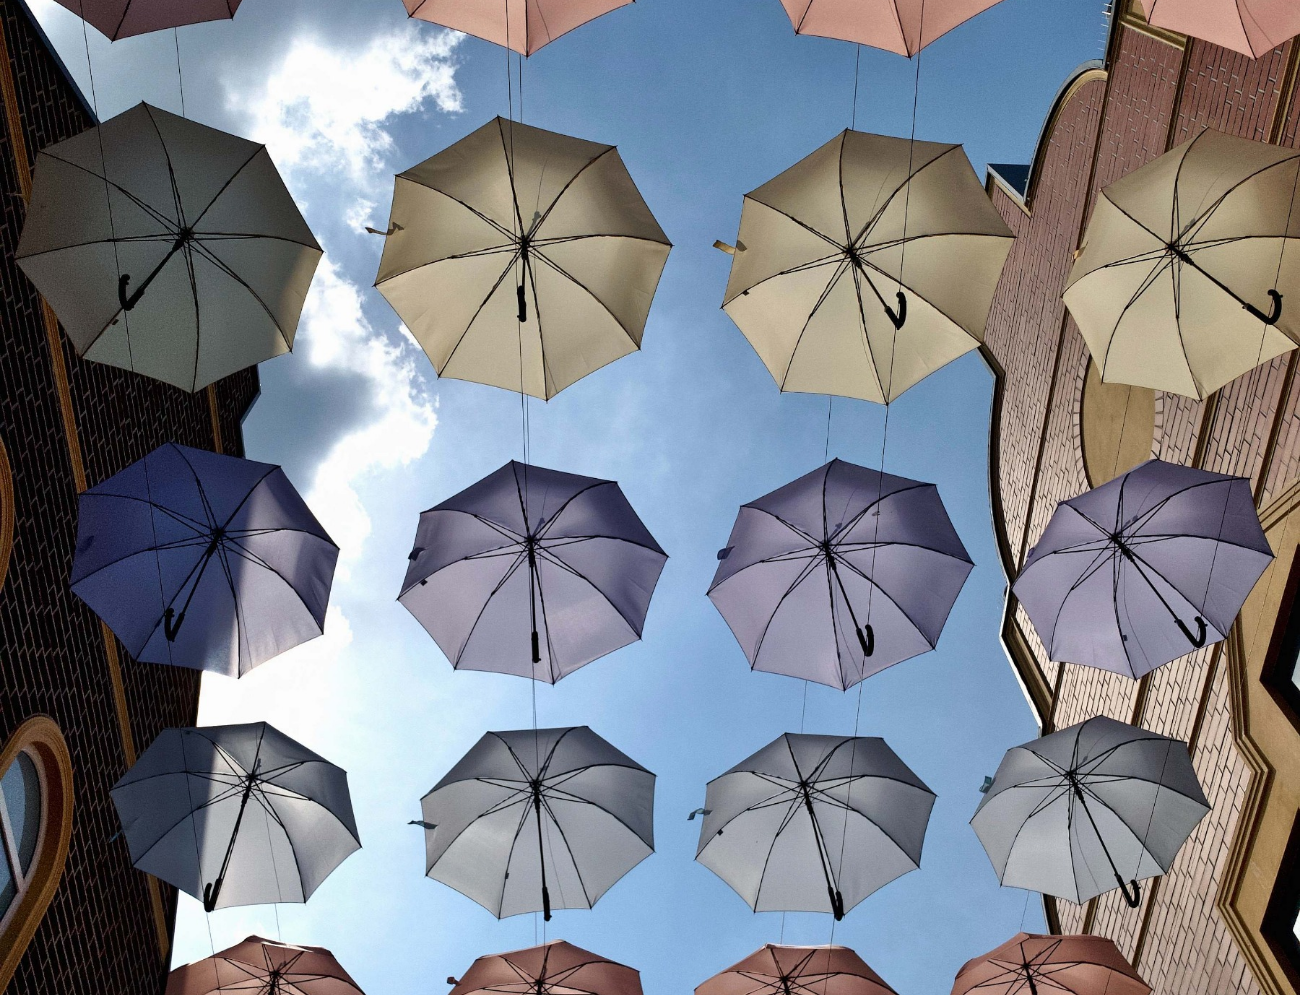 umbrellas viewed from below against a blue sky